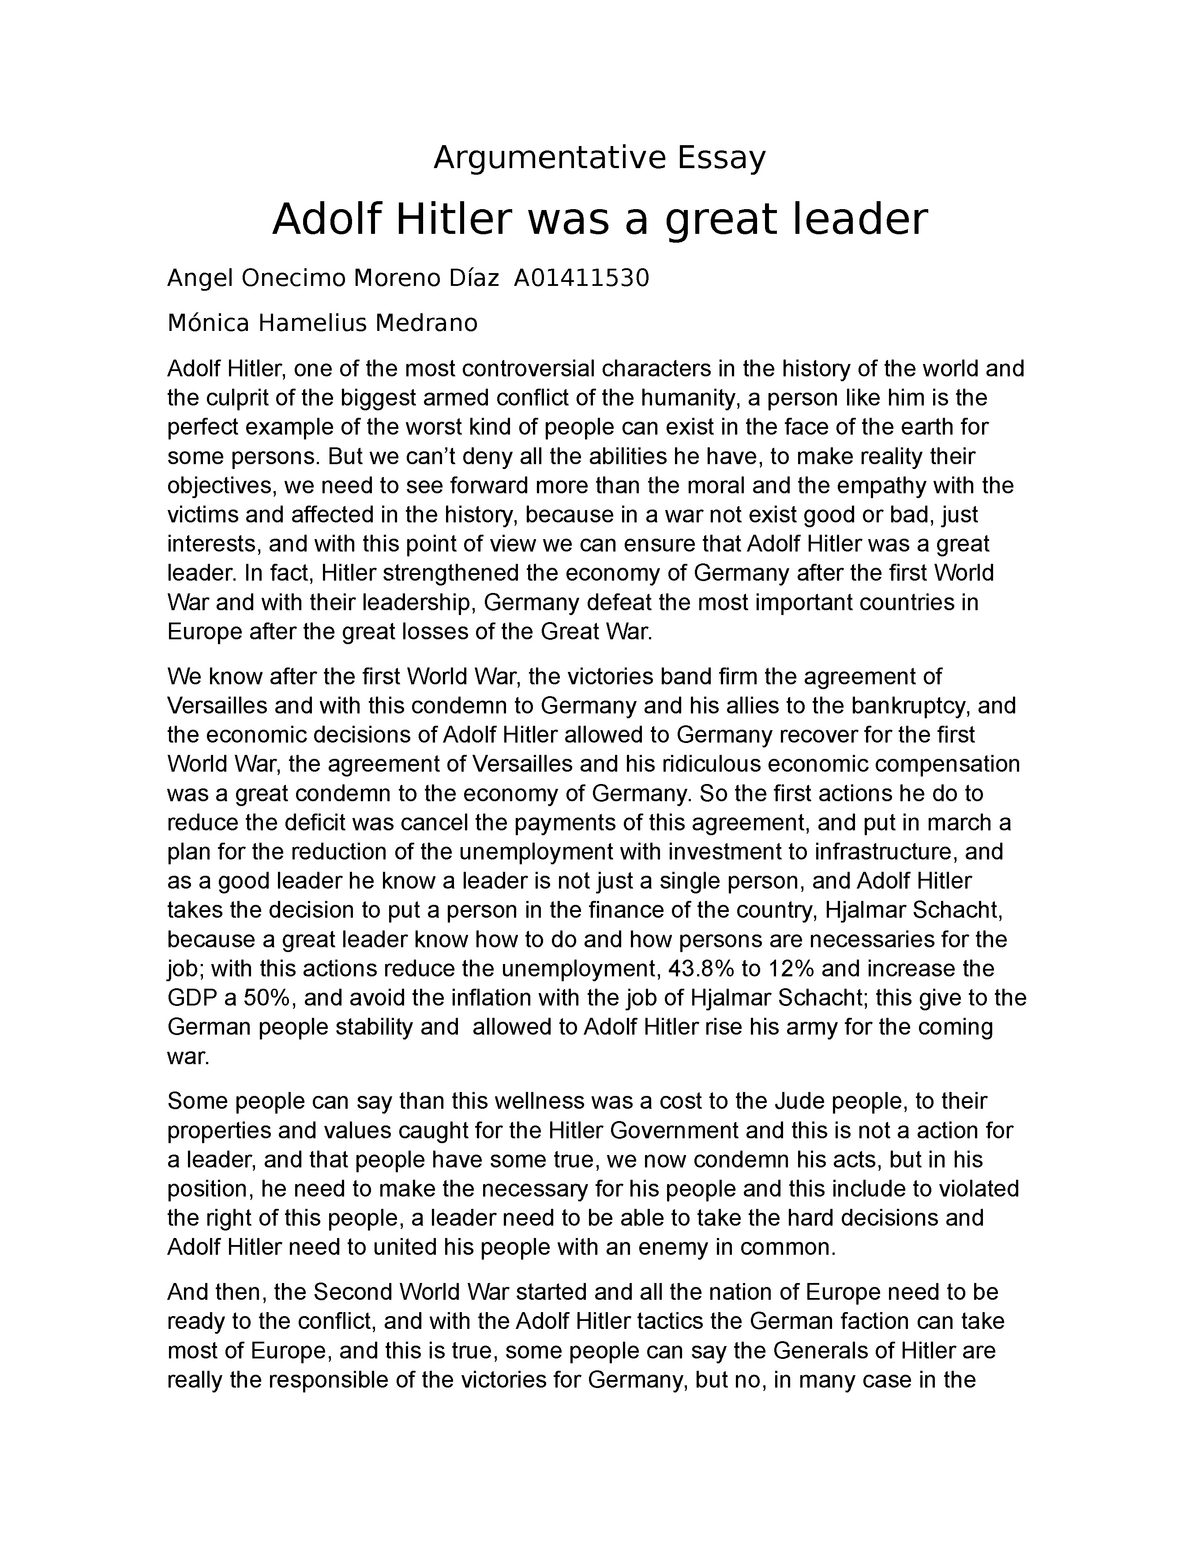 adolf hitler as a leader essay